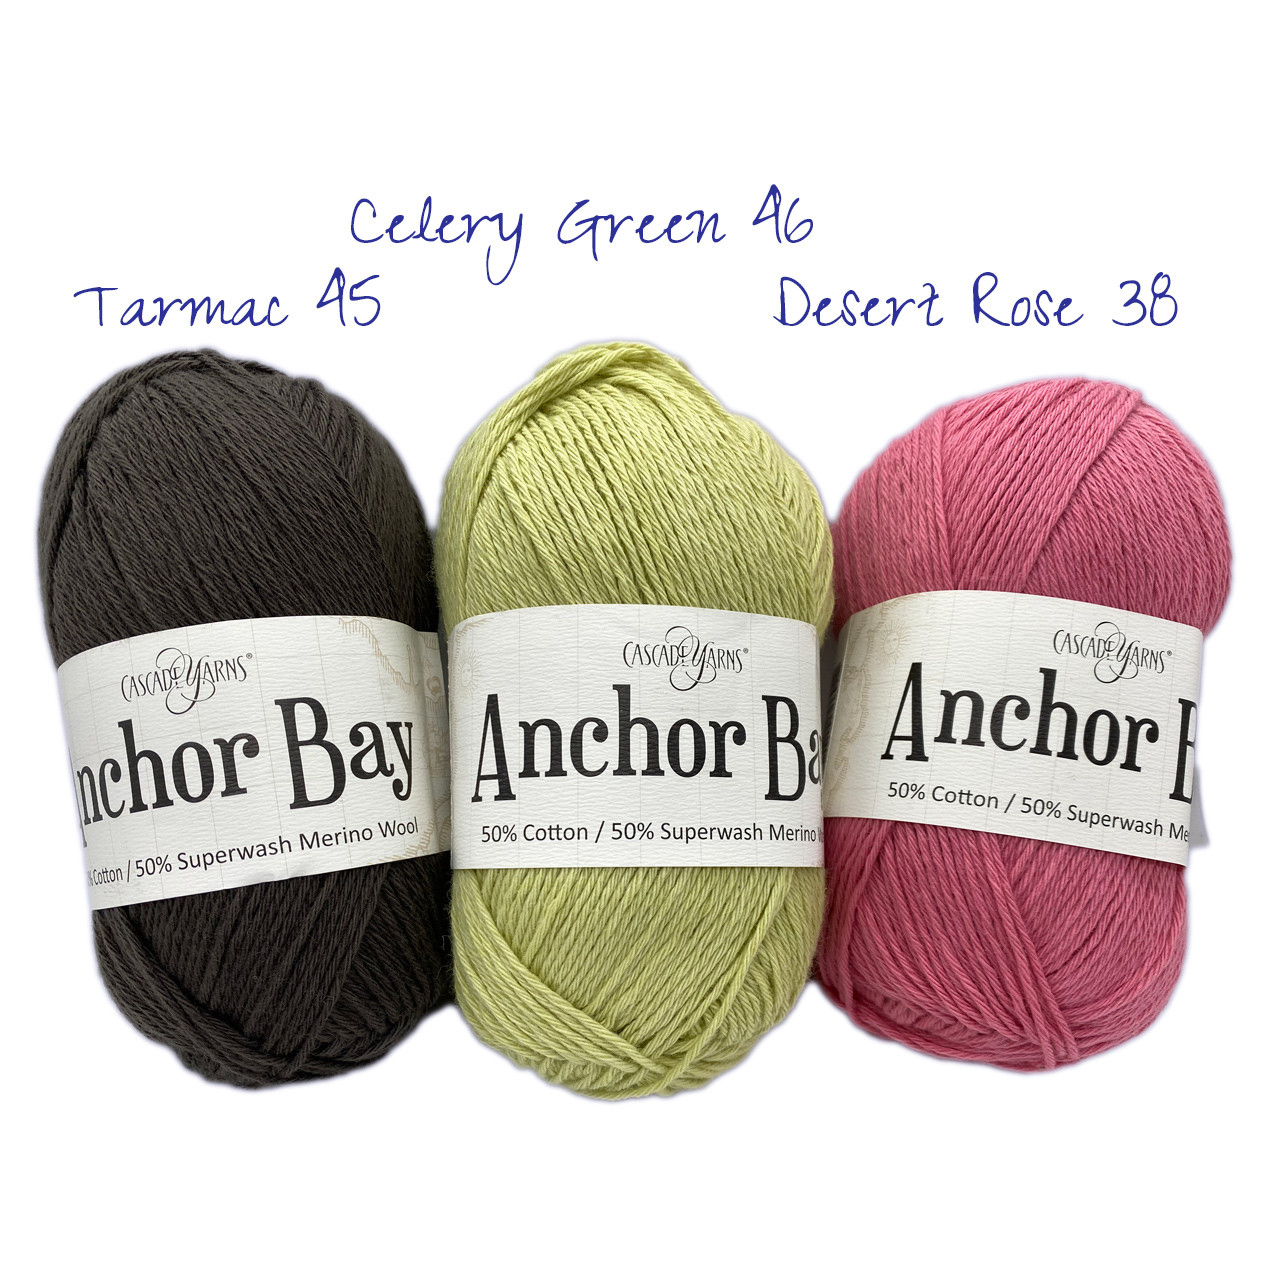 Machine Knitting - Tools - Page 1 - Angelika's Yarn Store